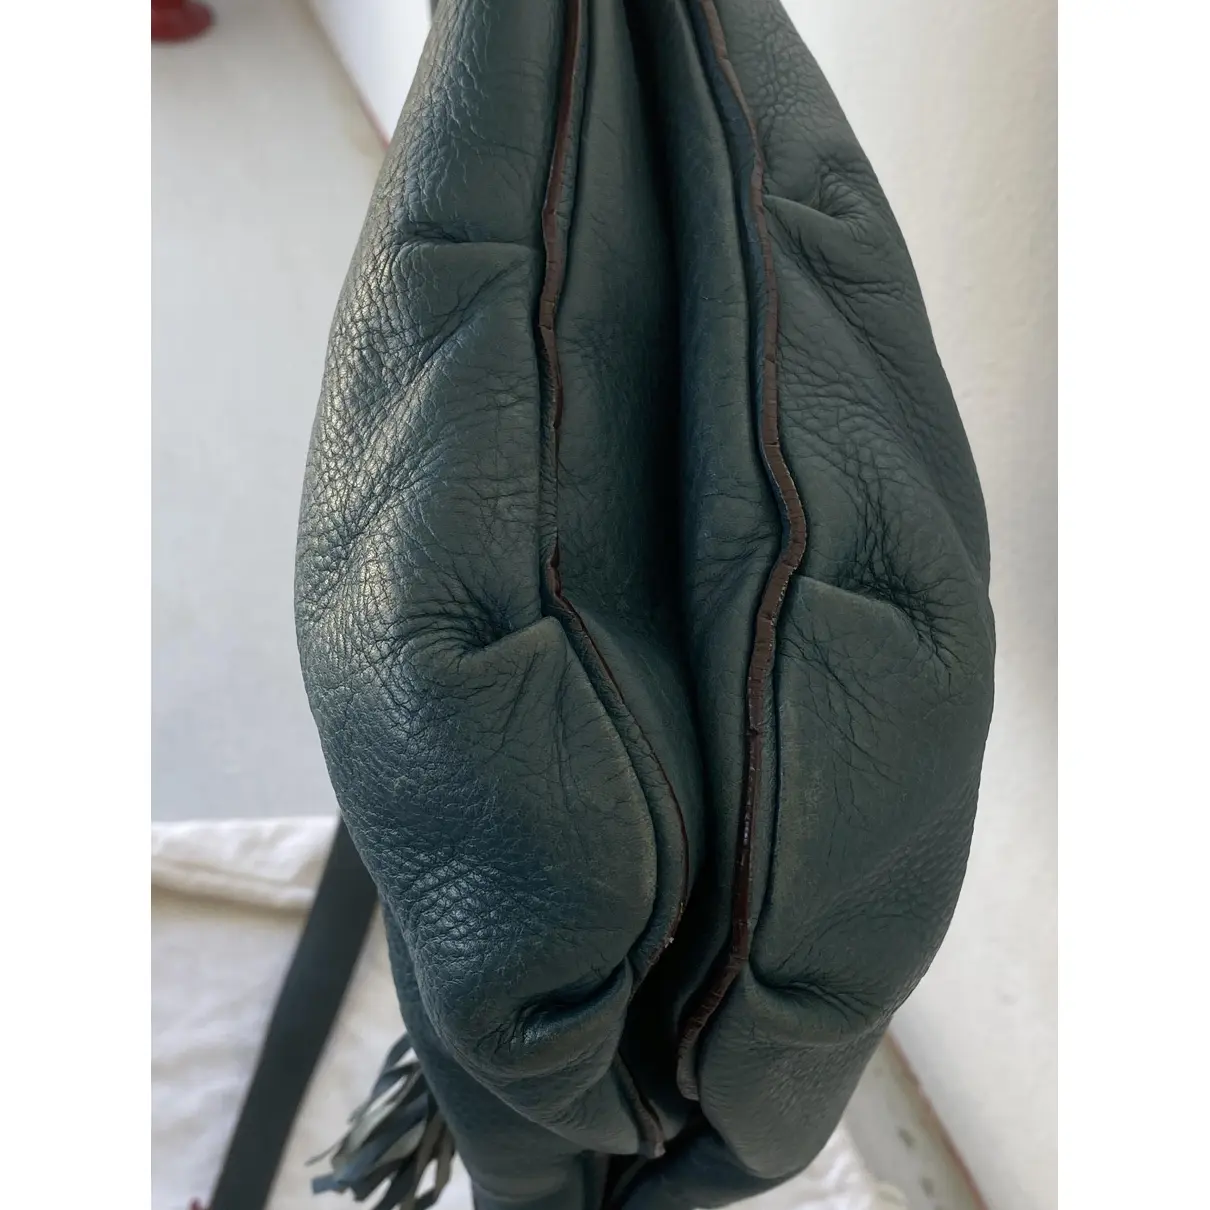 Leather handbag Salvatore Ferragamo - Vintage